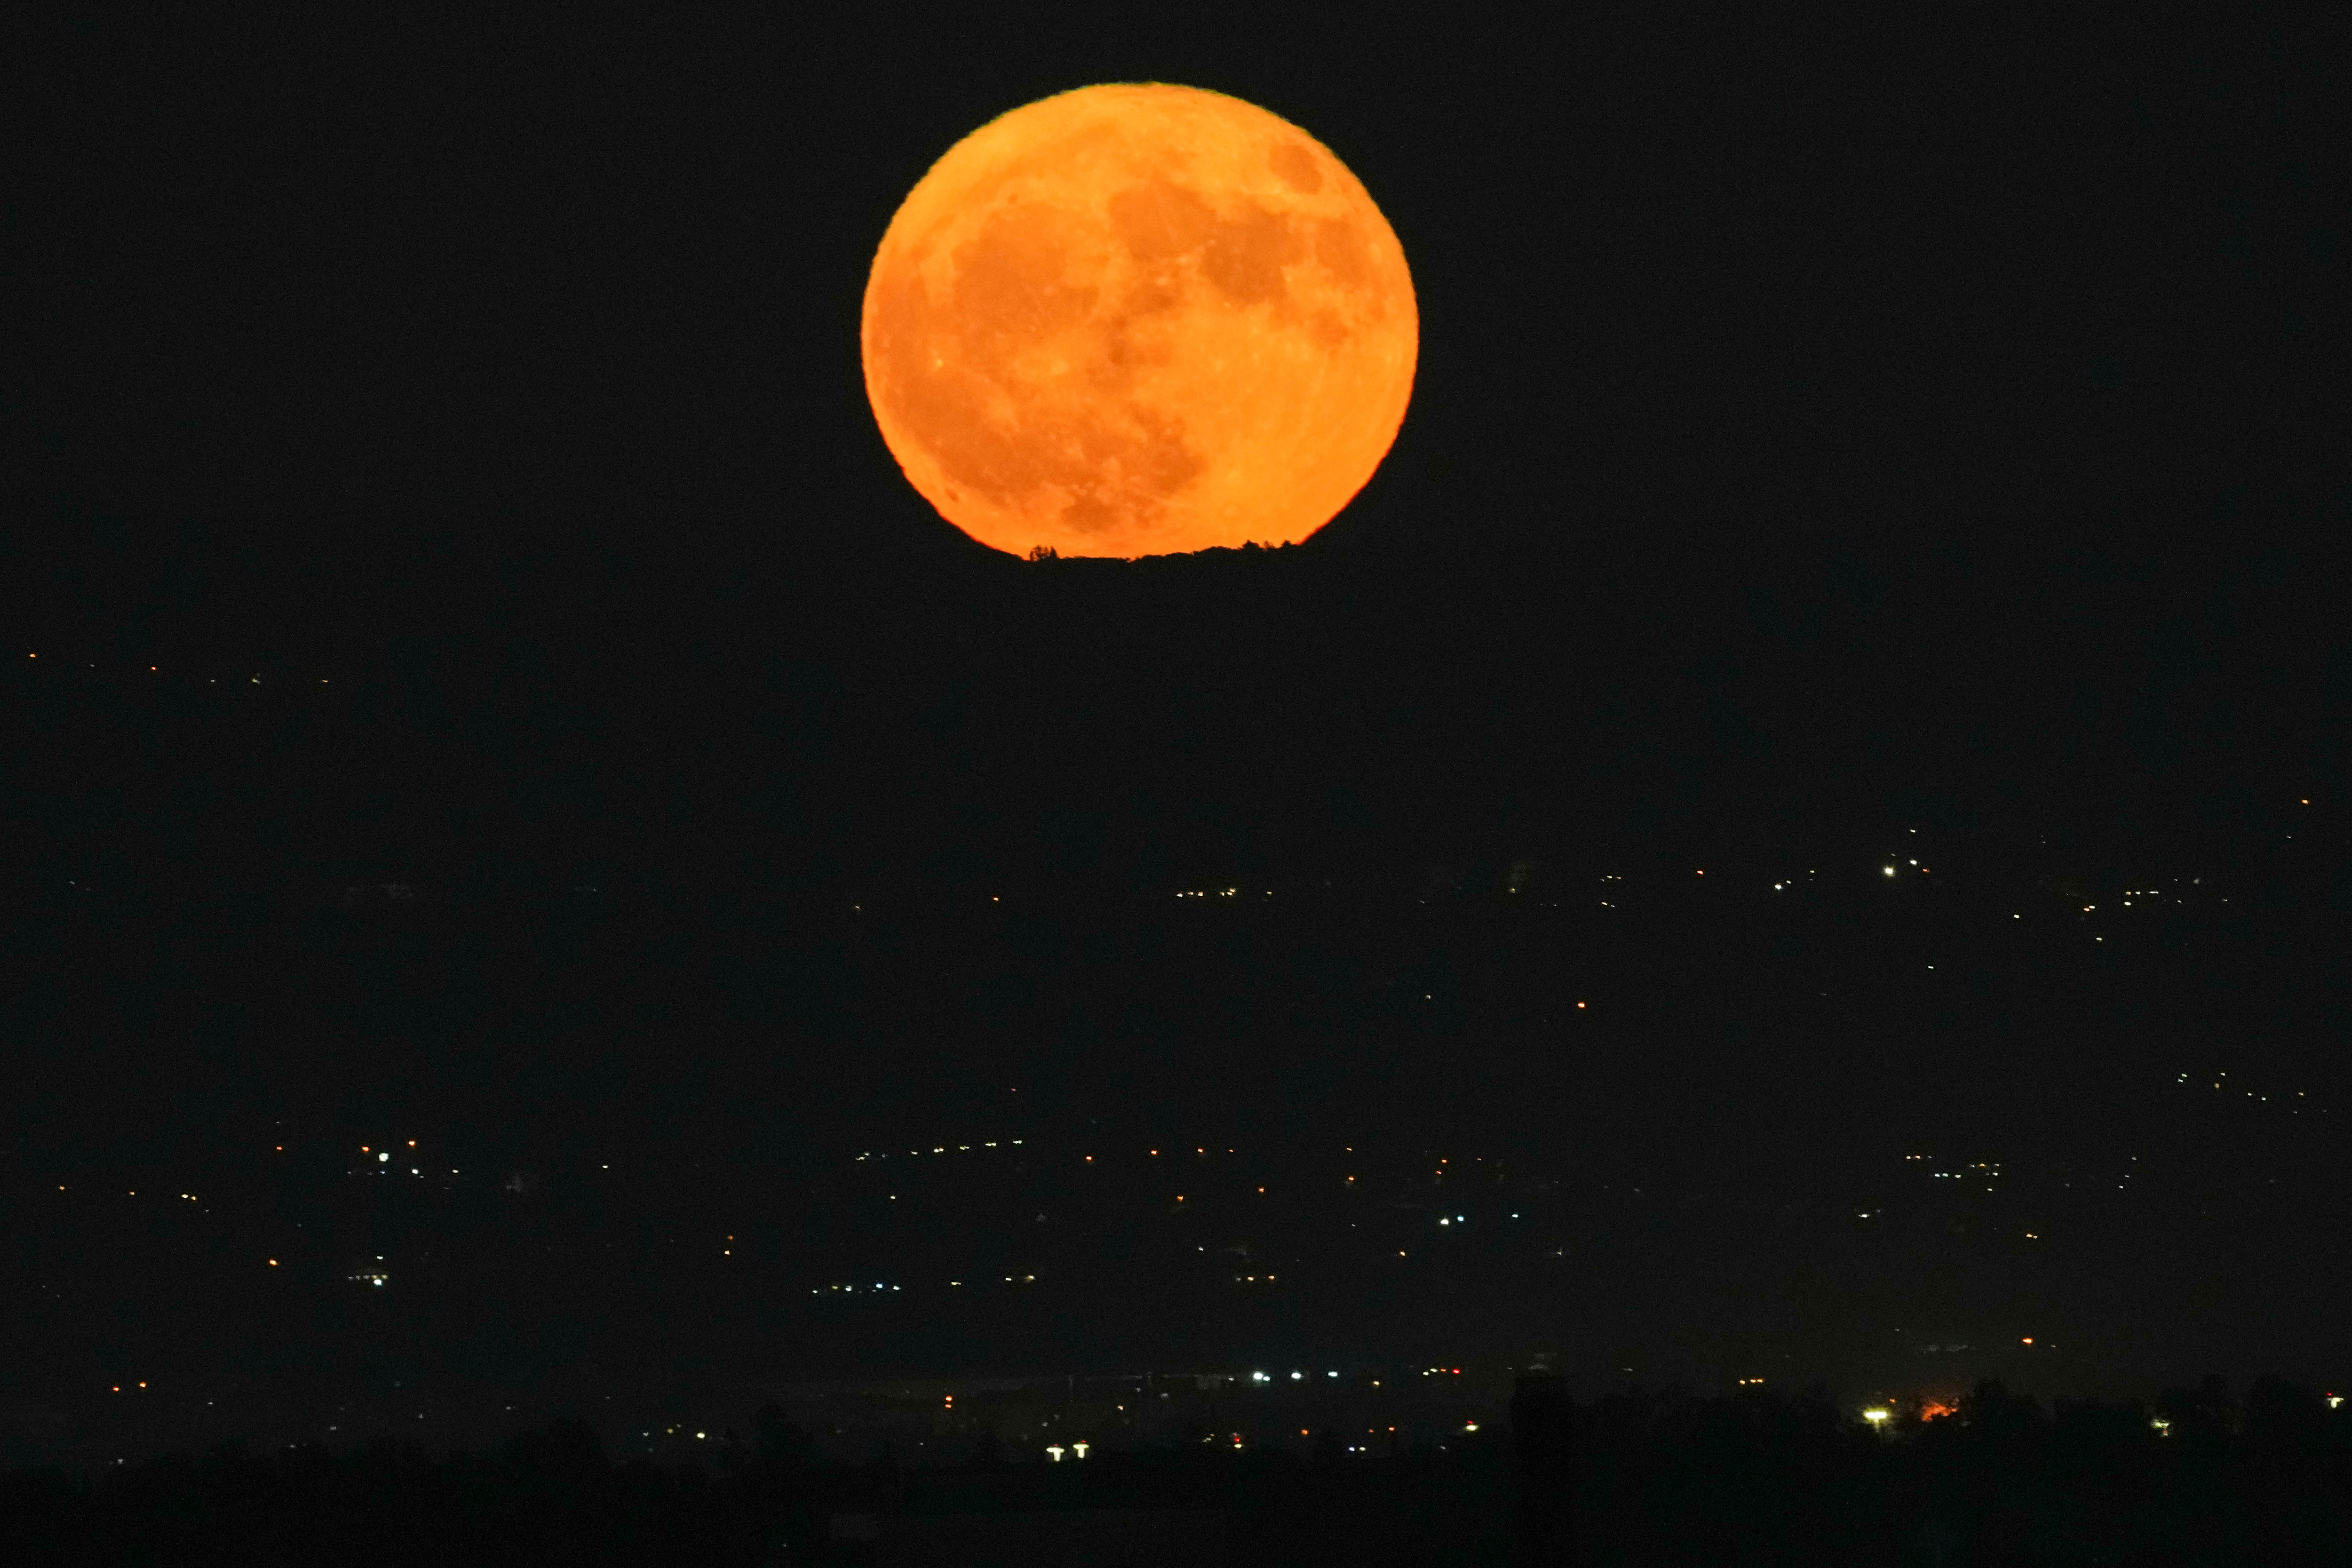 A large orange moon rises above a dimly seen cityscape.